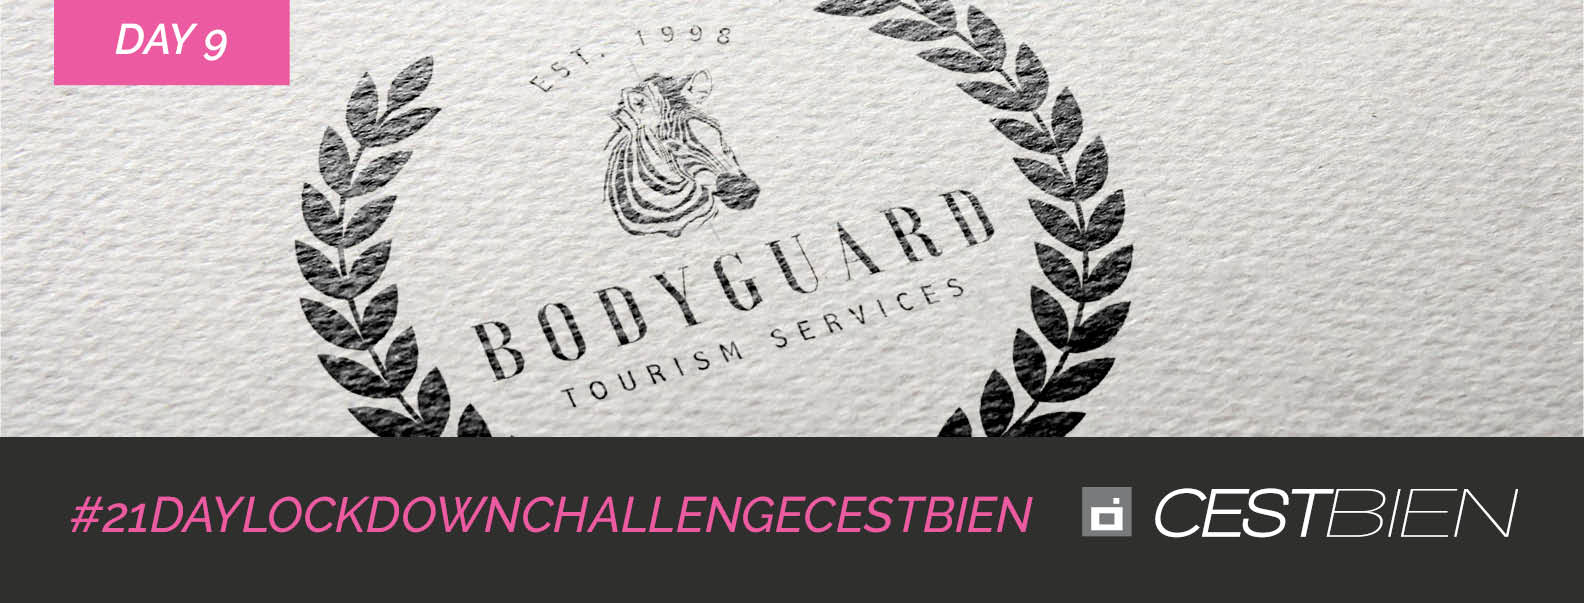 Lockdown Day9 – Client: Bodyguard Tourism Services